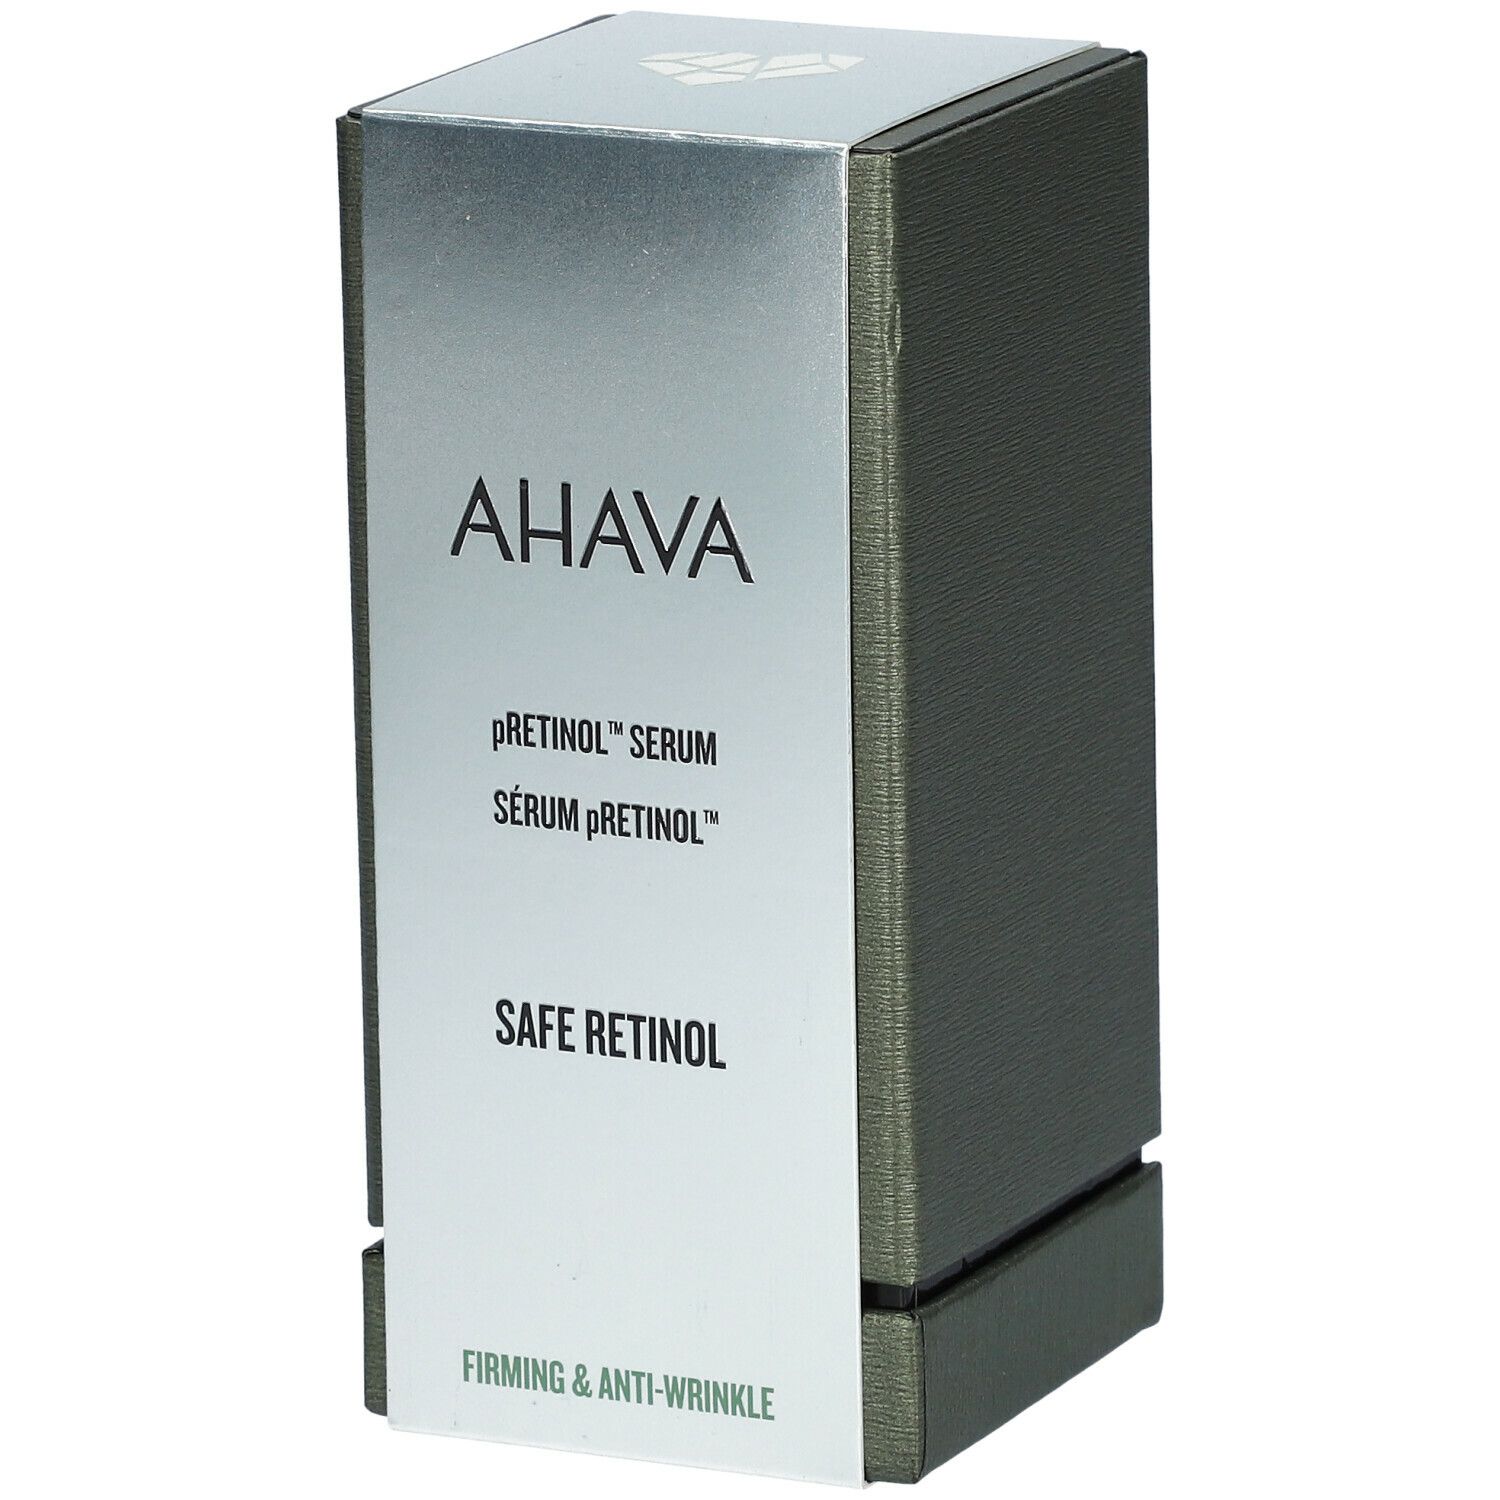 Image of AHAVA pRetinol™ Serum